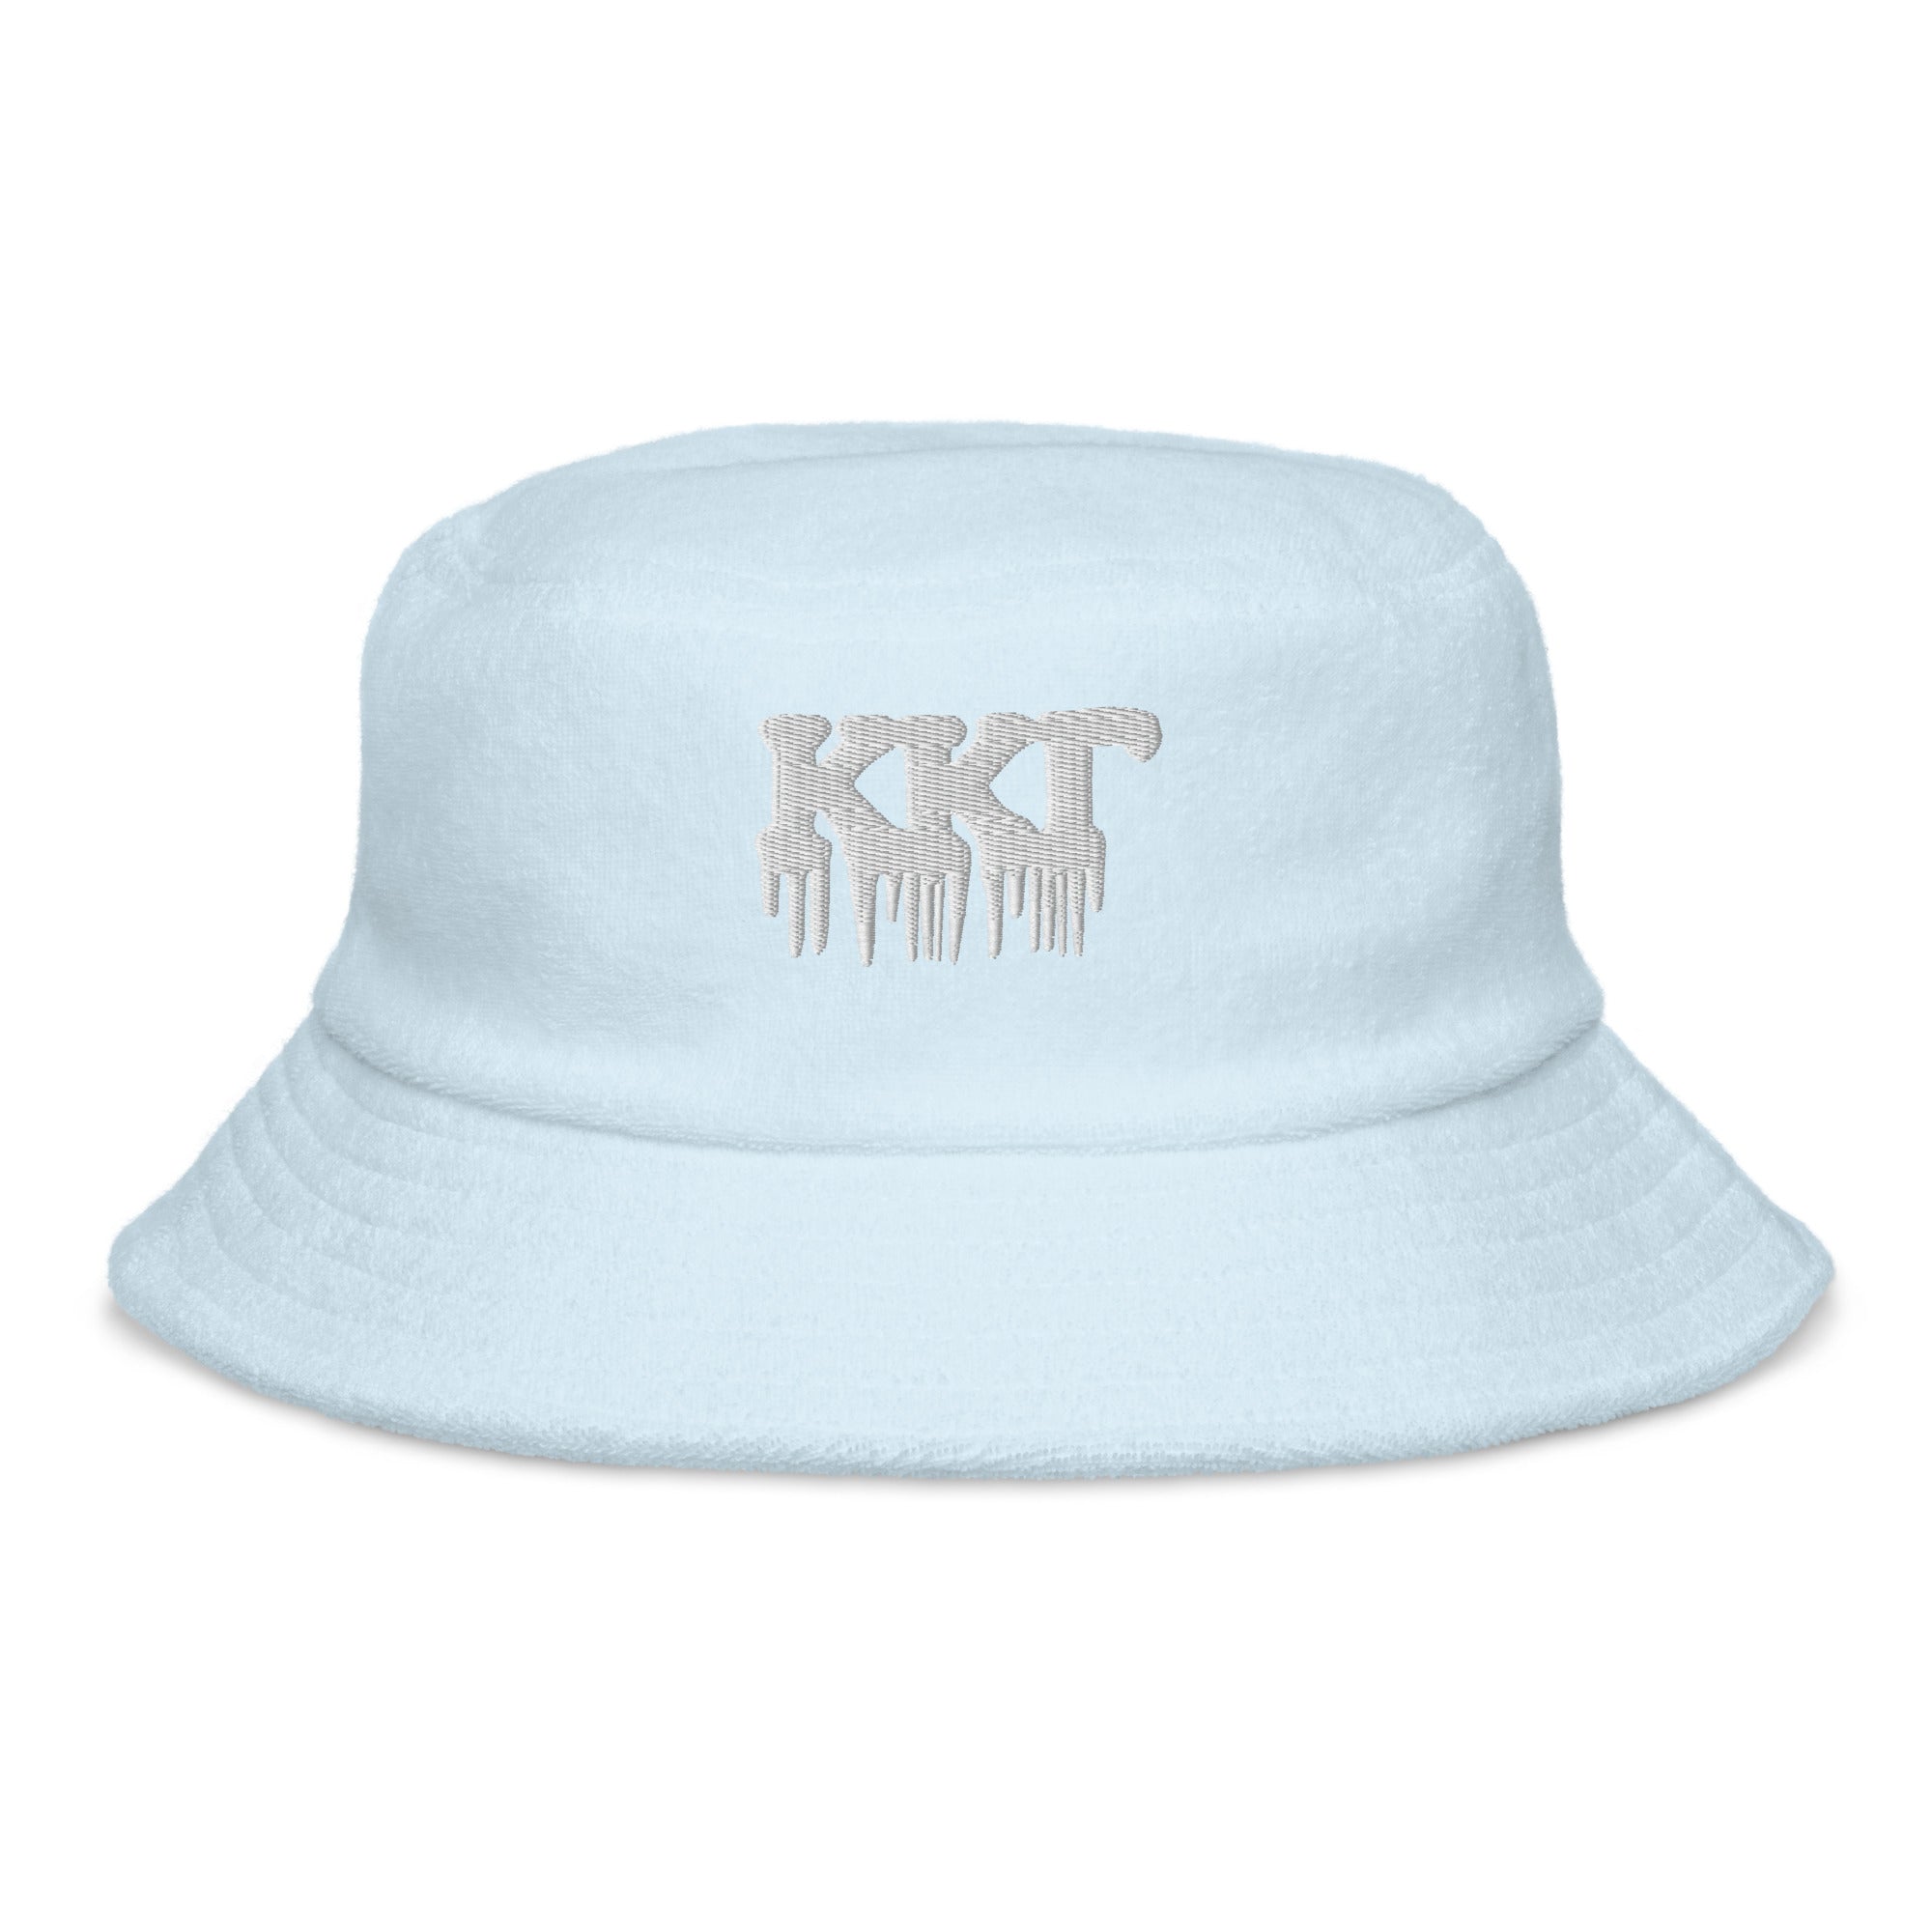 Kappa Kappa Gamma Drip Terry Cloth Bucket Hat